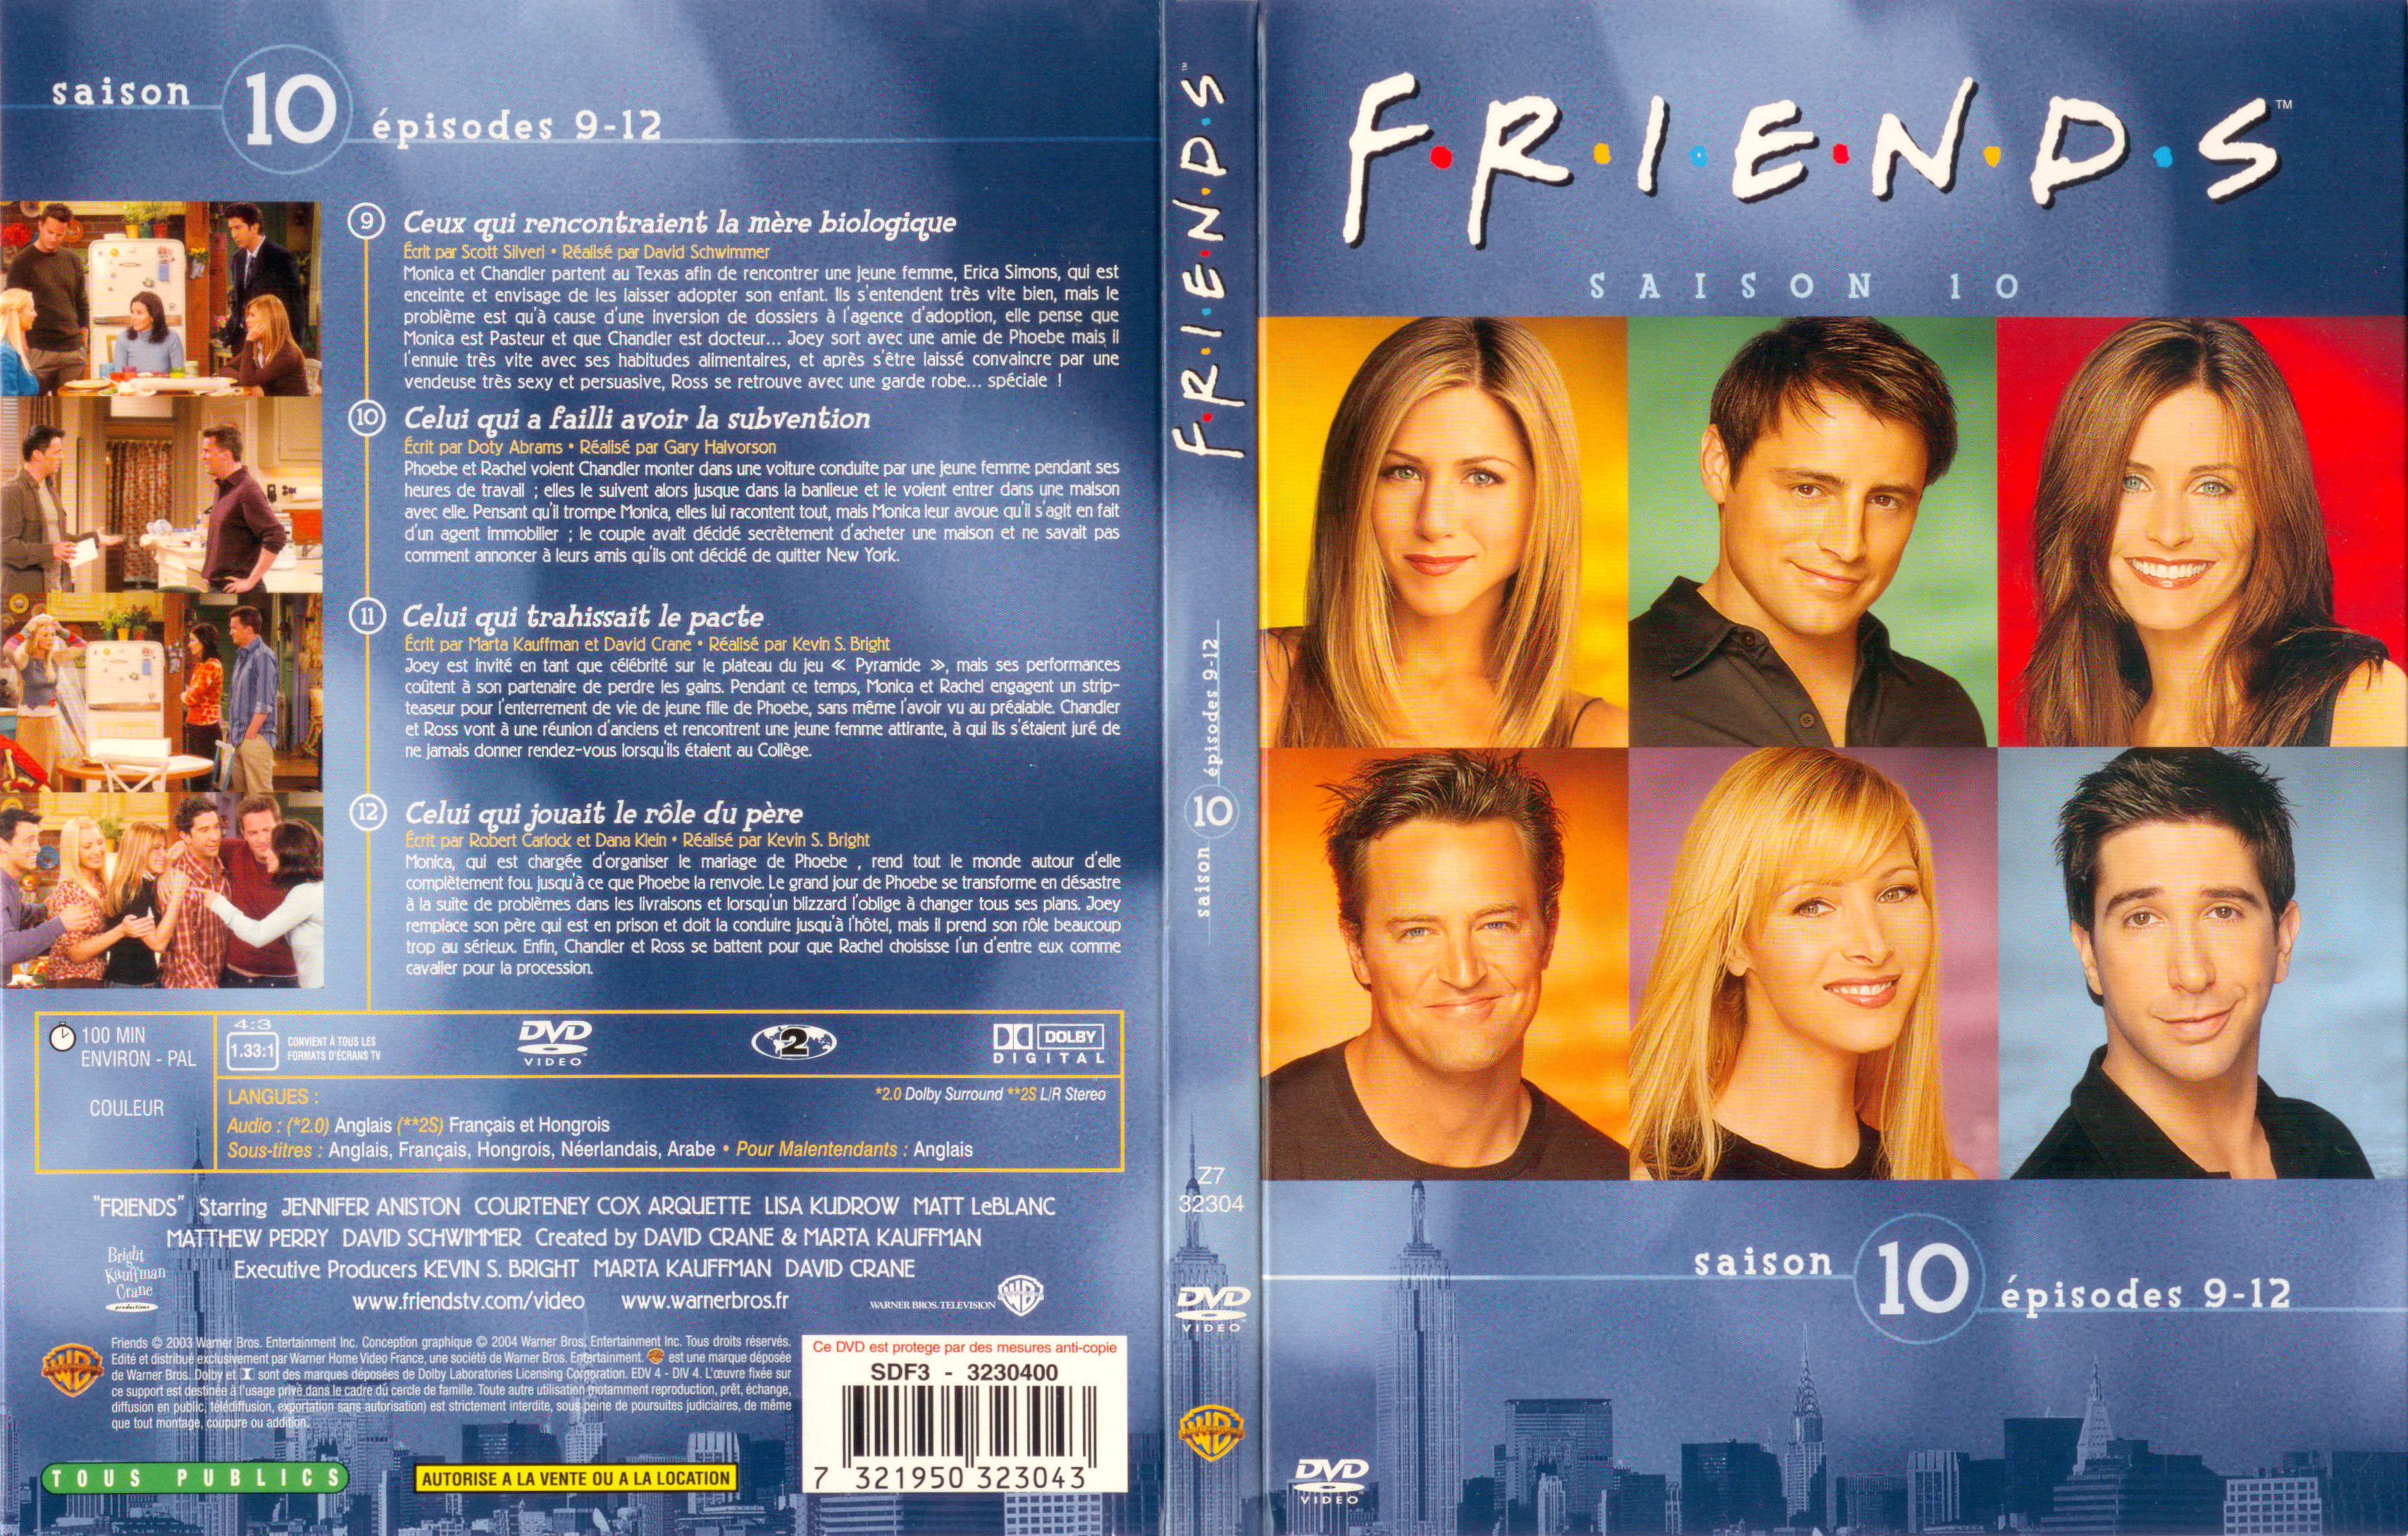 Jaquette DVD Friends saison 10 dvd 3